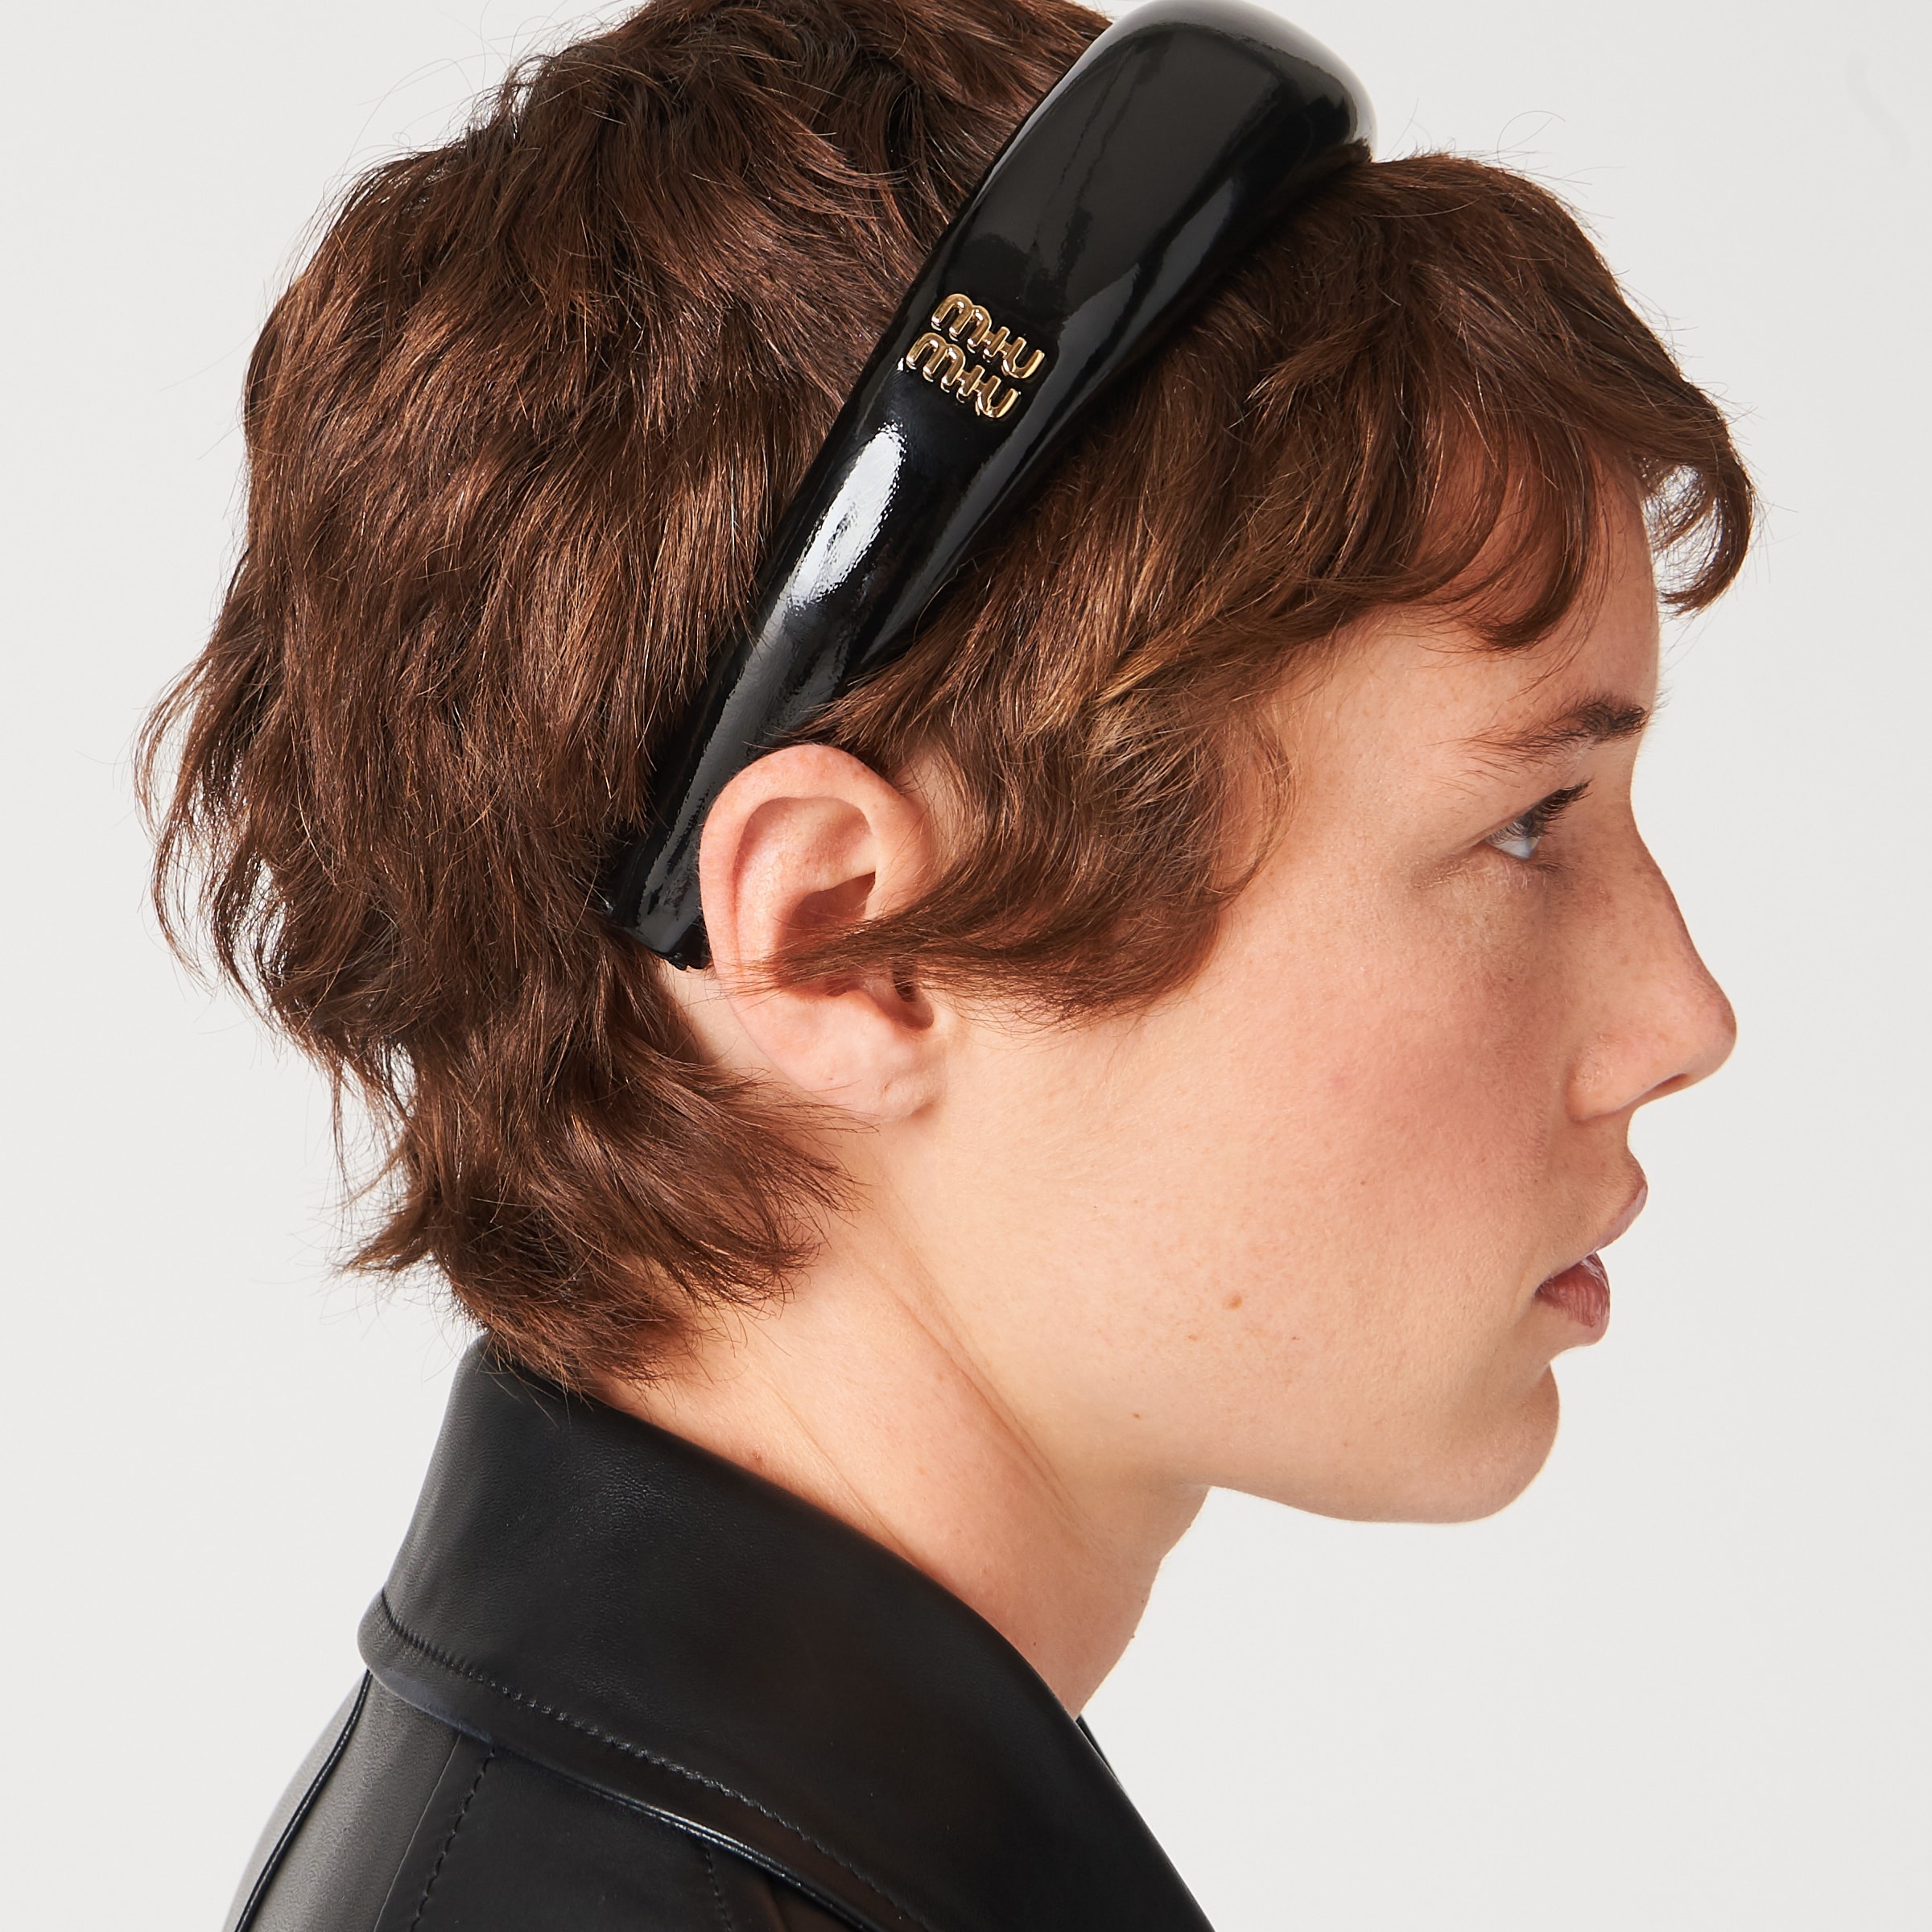 Patent leather headband - 2